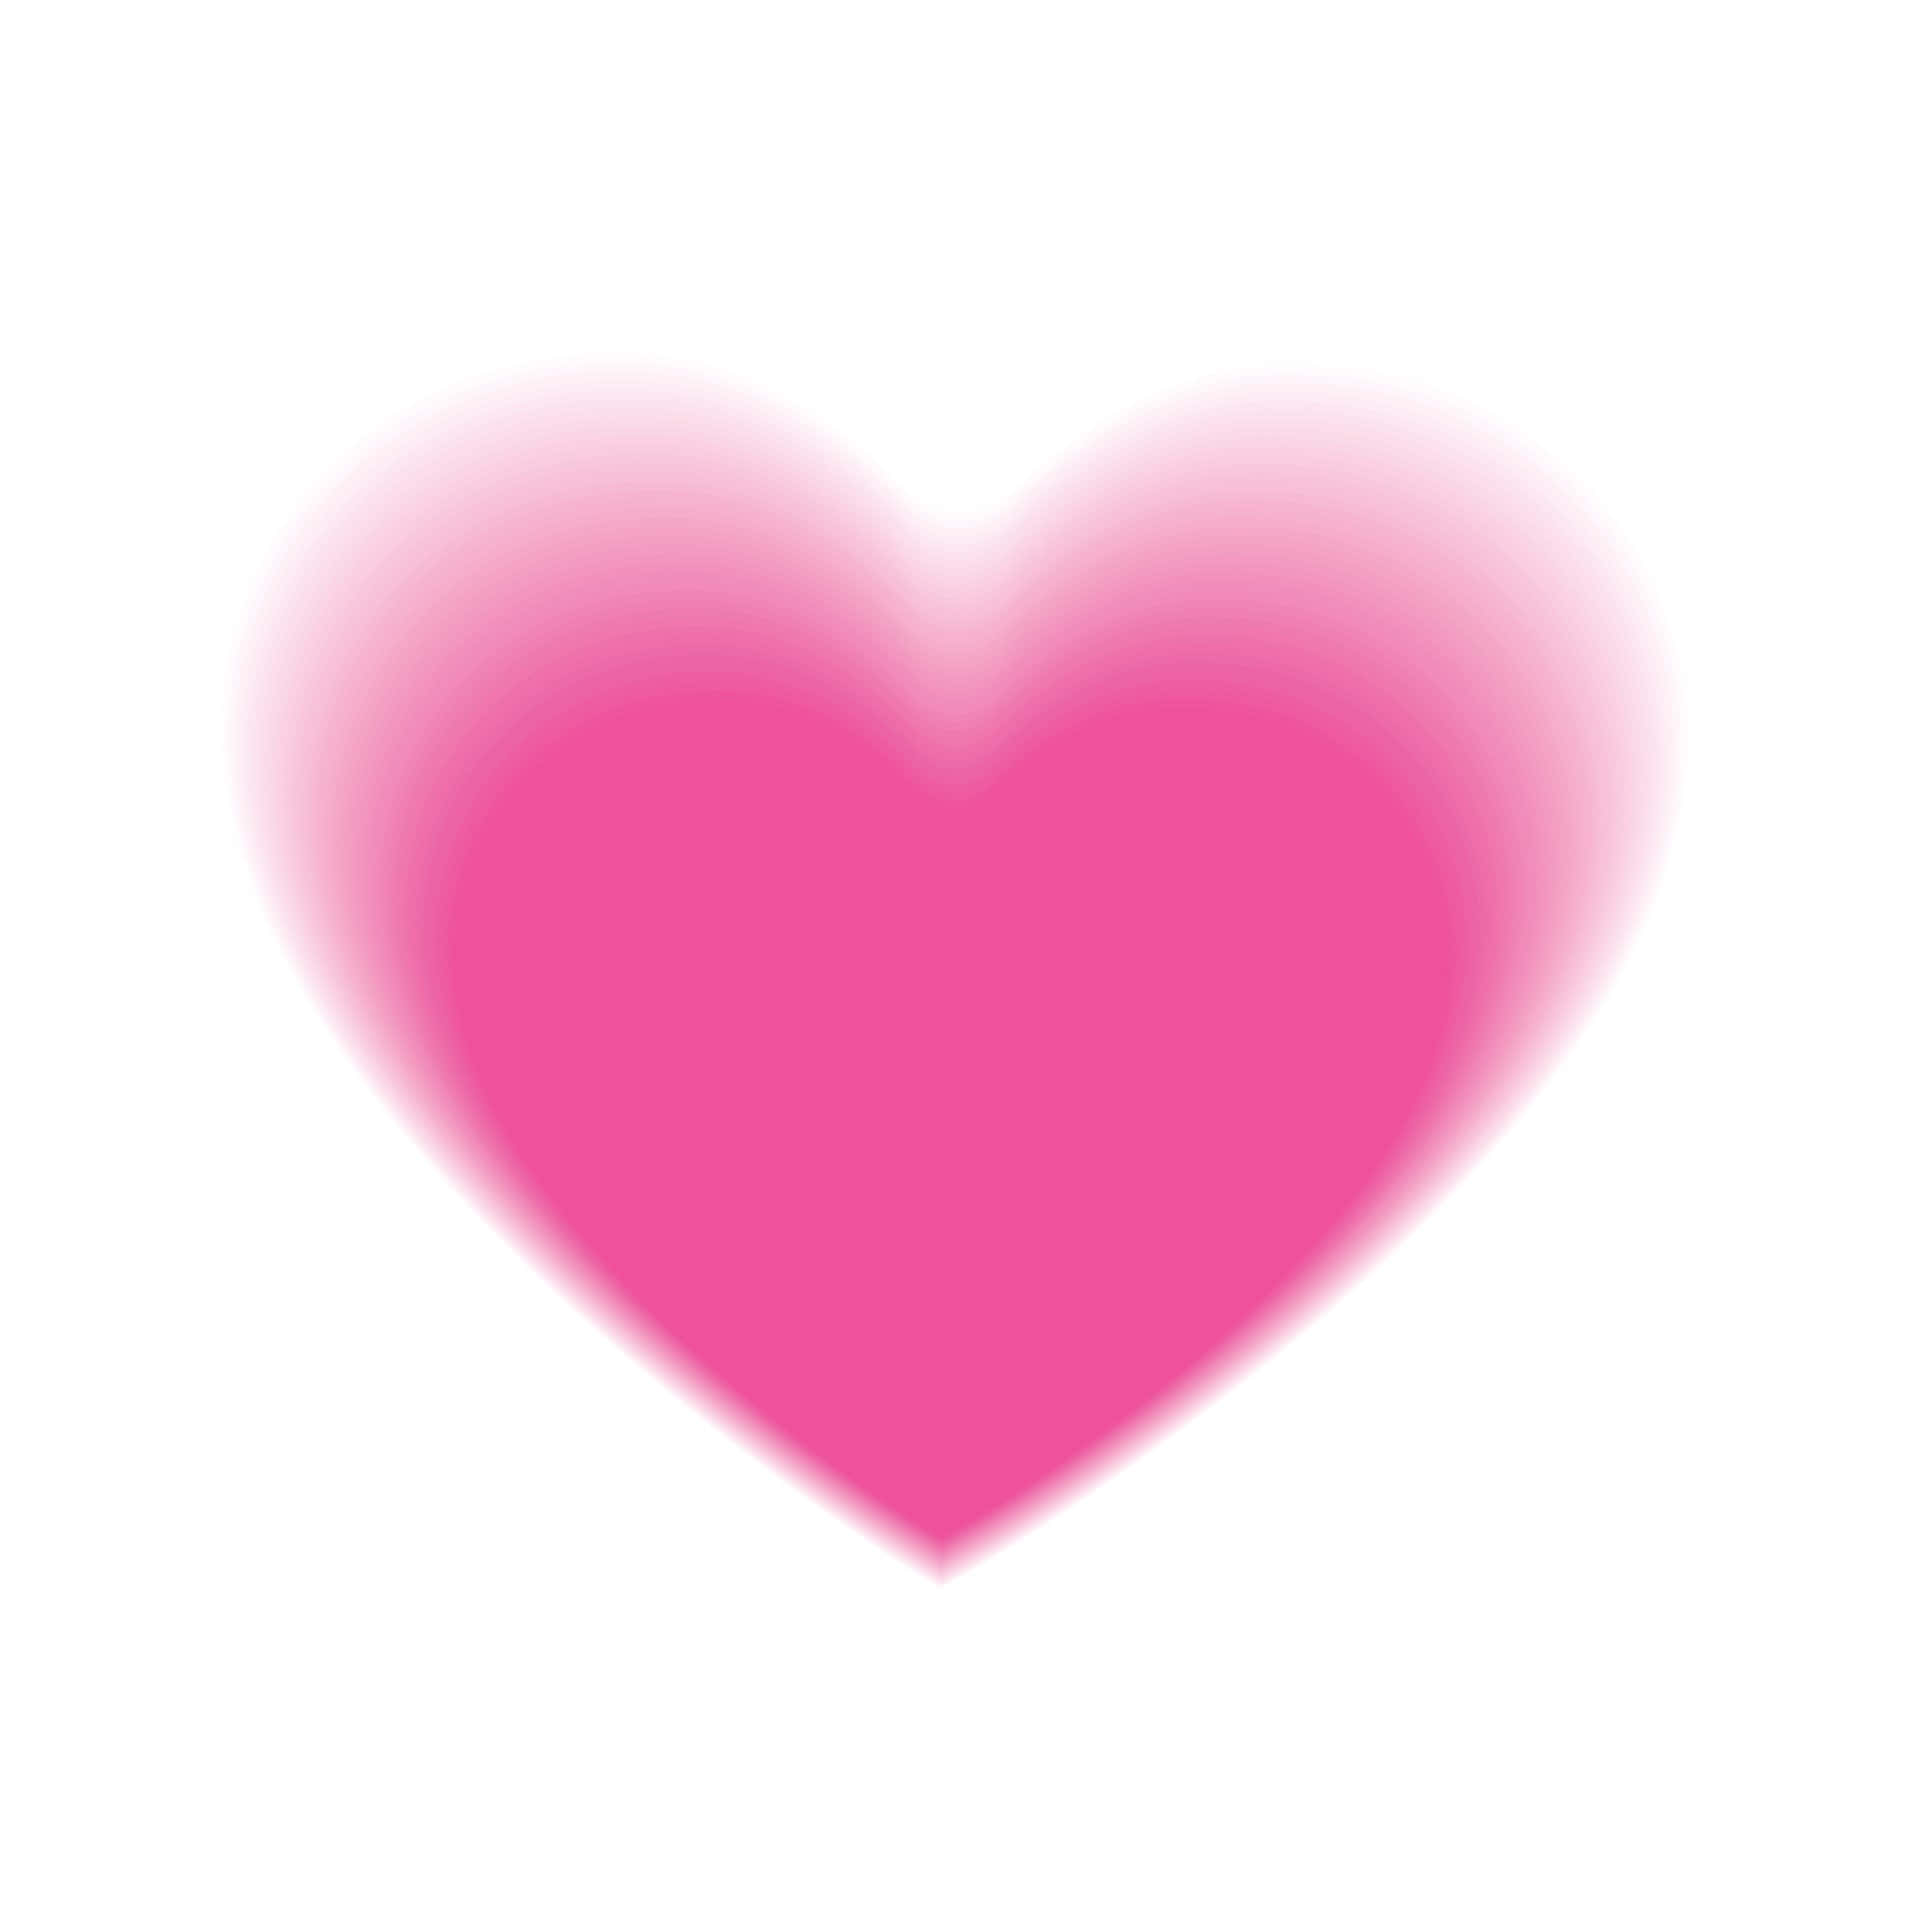 Pink Gradient Blurry Heart Wallpaper